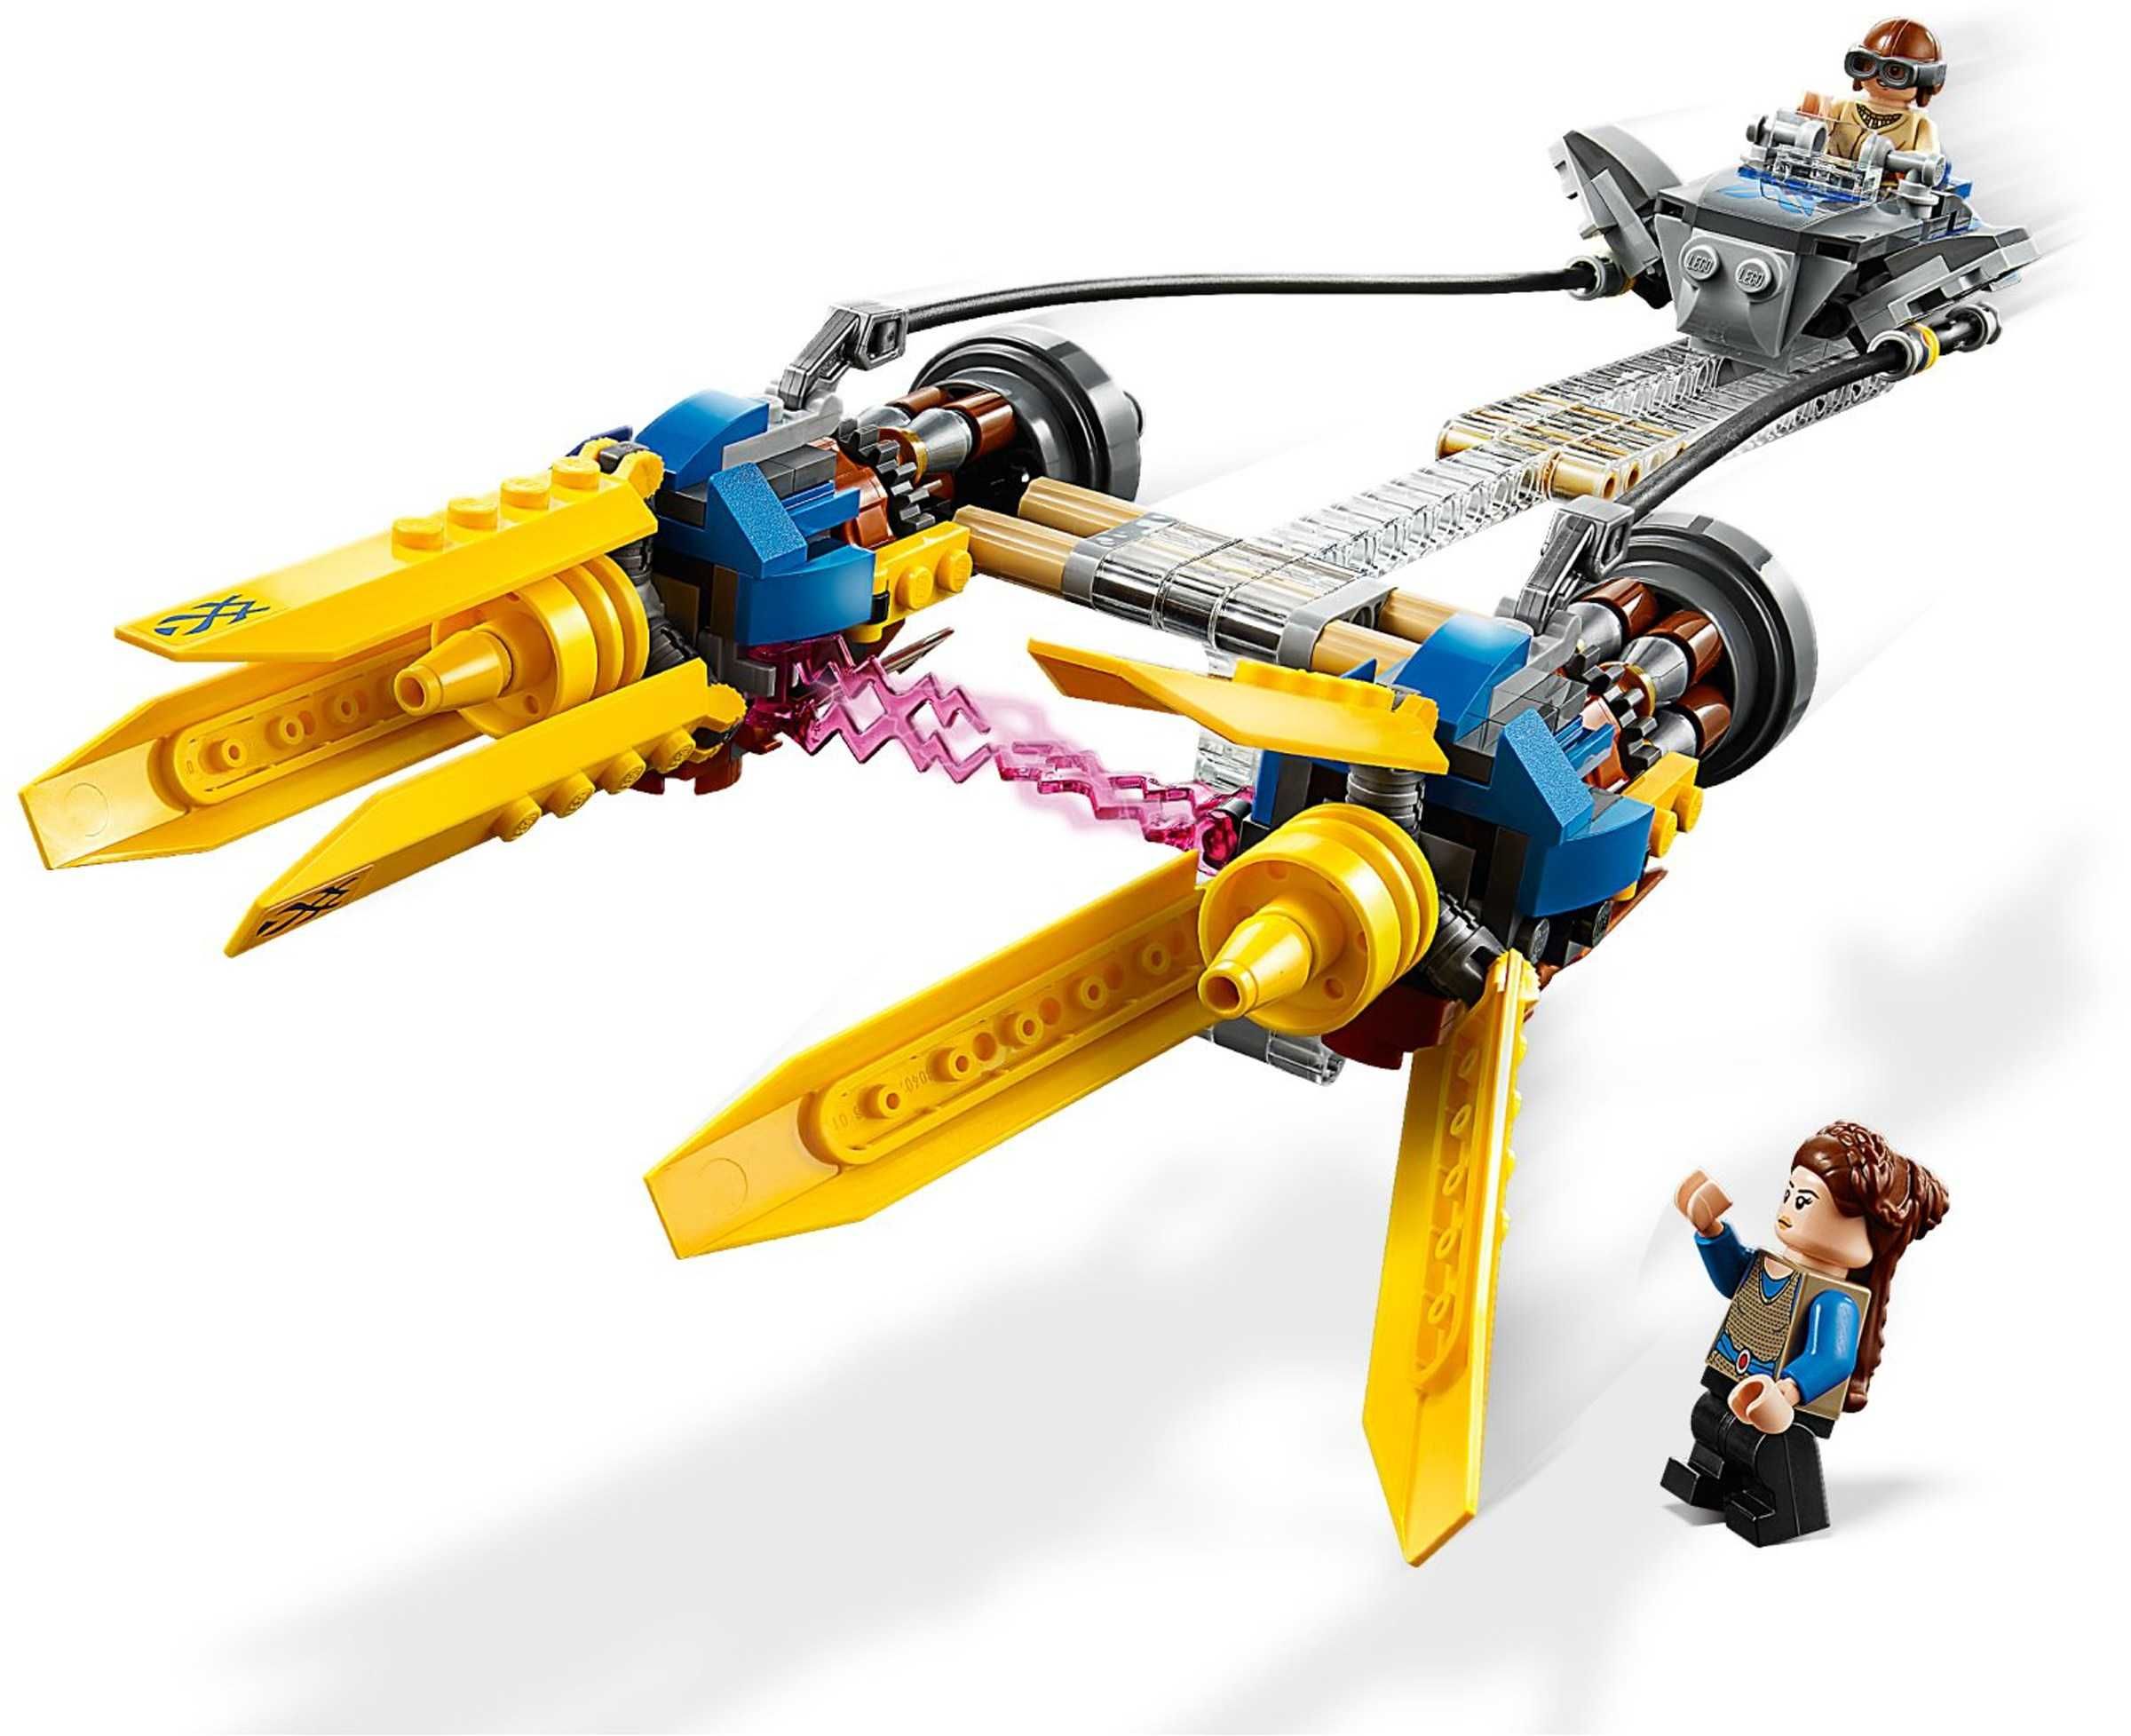 LEGO Star Wars 75258 : Anakin's Podracer - editie aniversara